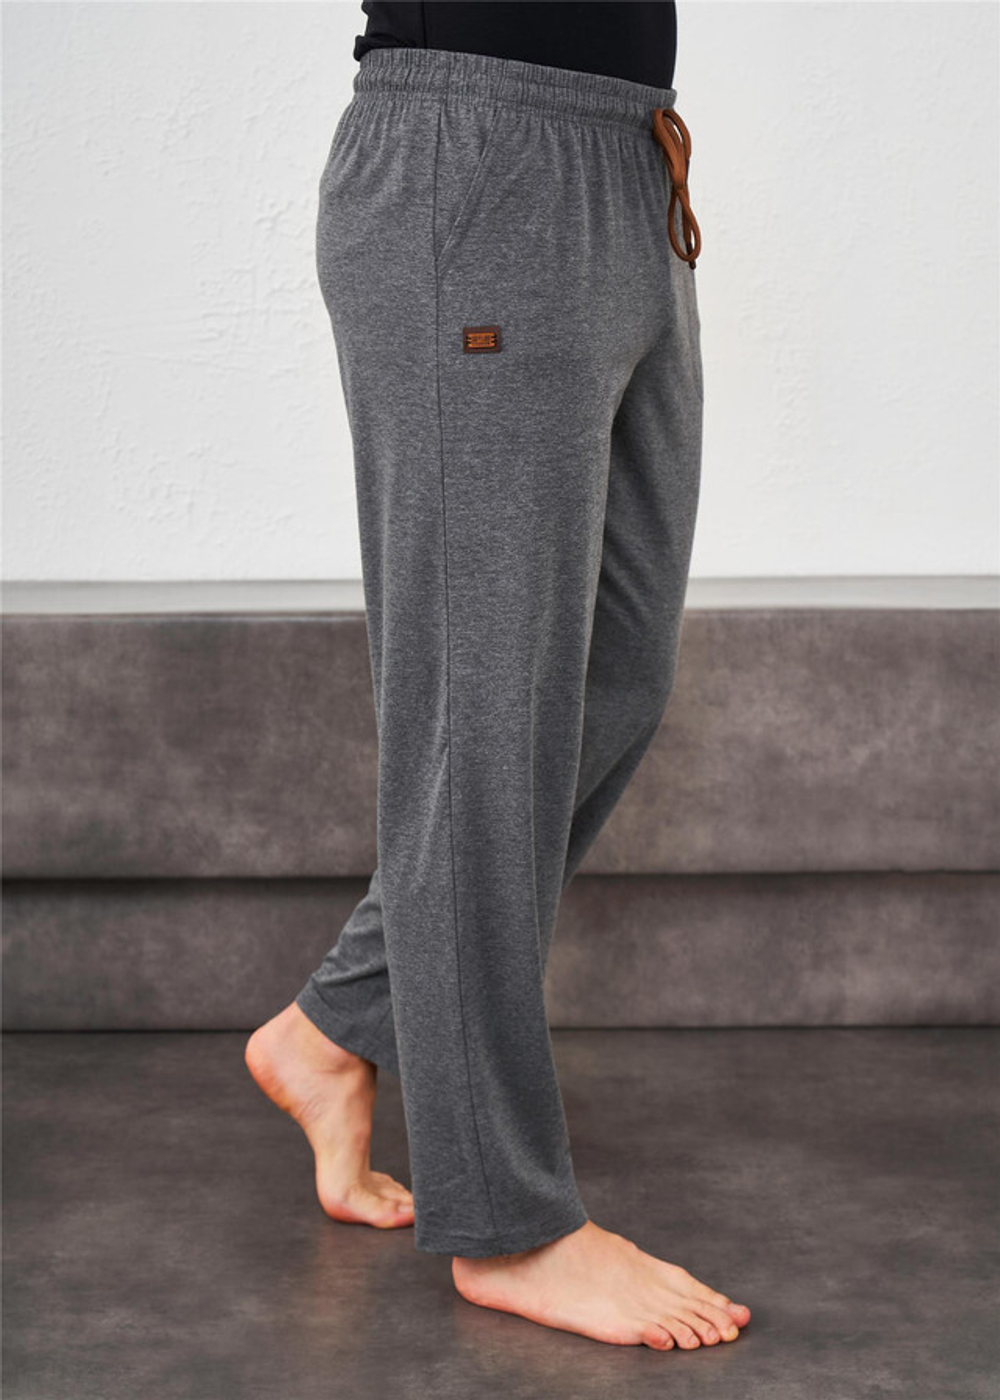 RELAX MODE - Брюки пижамные мужские штаны домашние - 9168